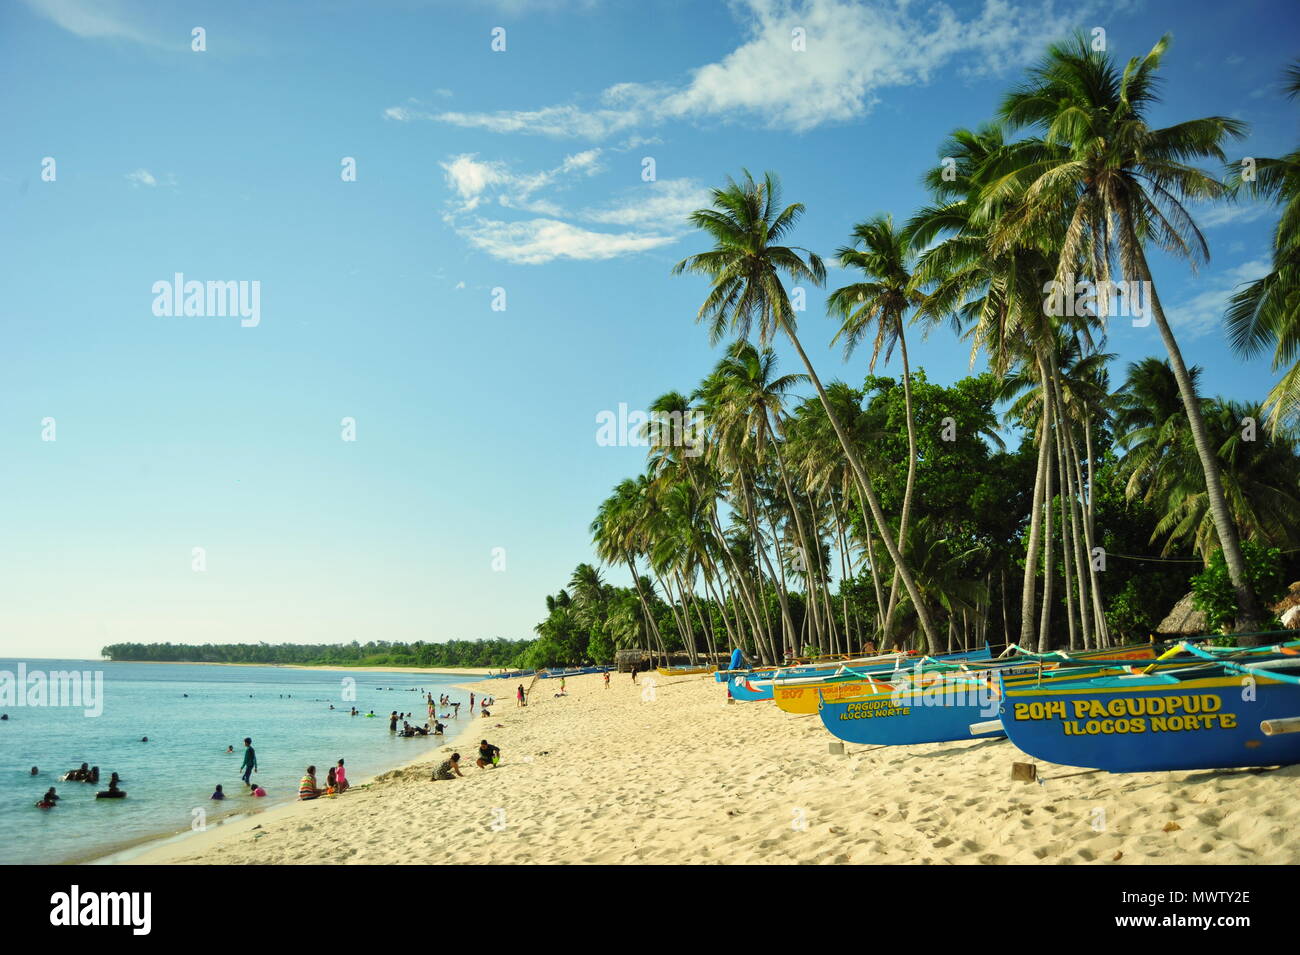 Saud Beach, Pagudpud, Luzon, Philippines Banque D'Images